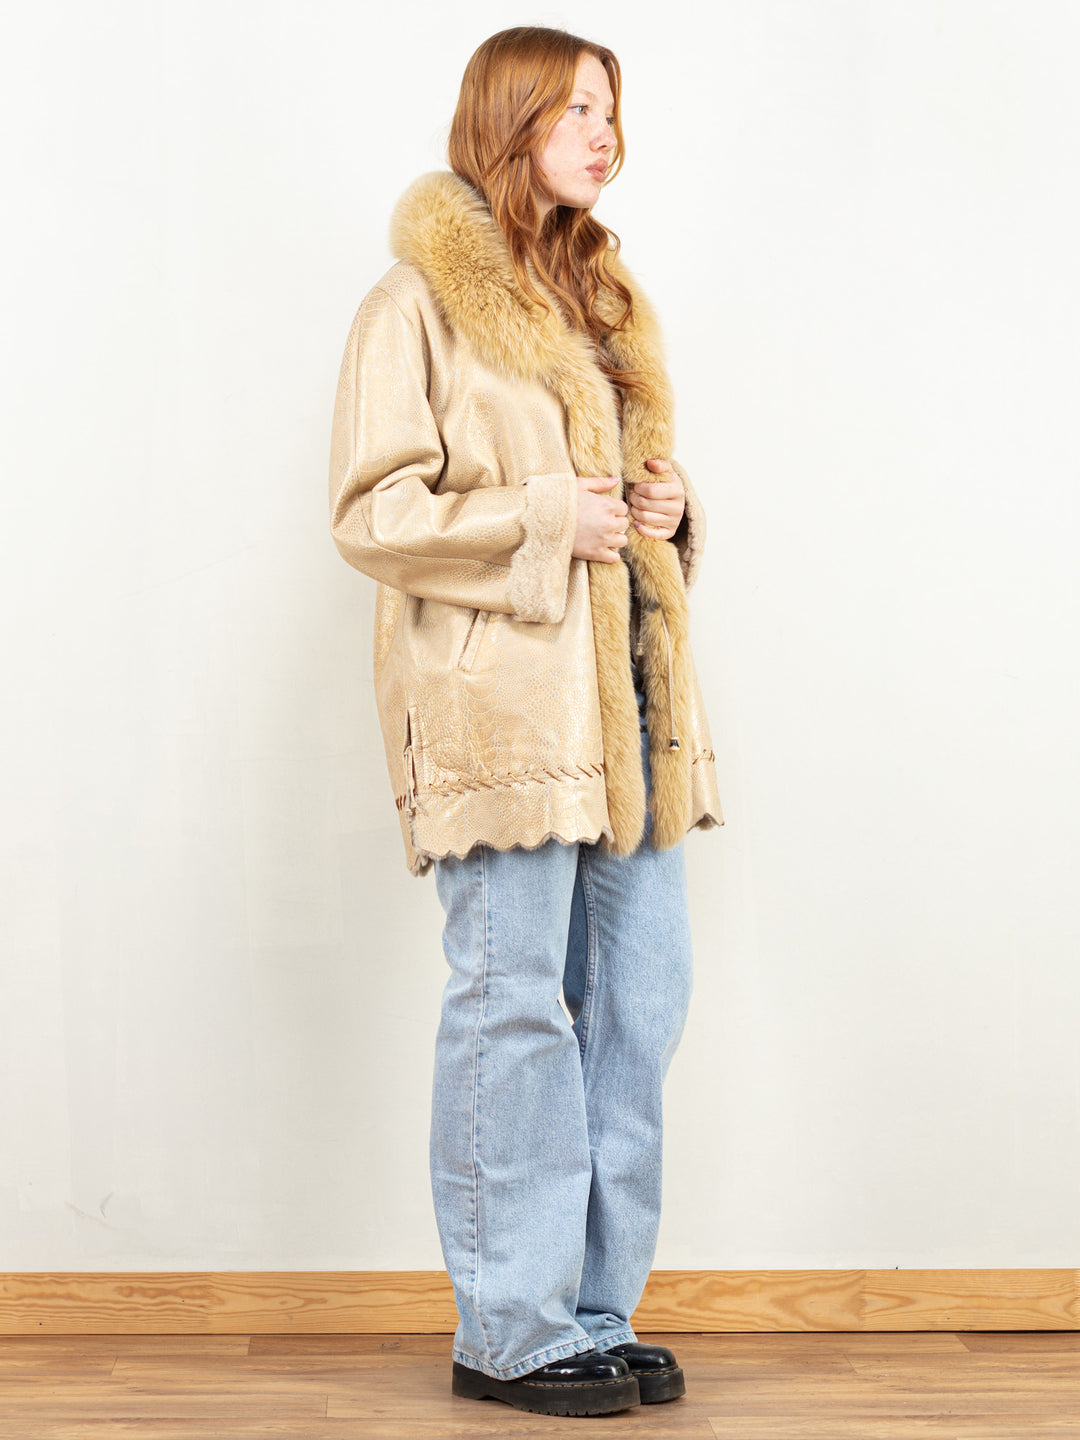 Penny Lane Coat 90's women sheepskin shearling coat vintage boho hippie style almost famous sustainable women clothing size large L